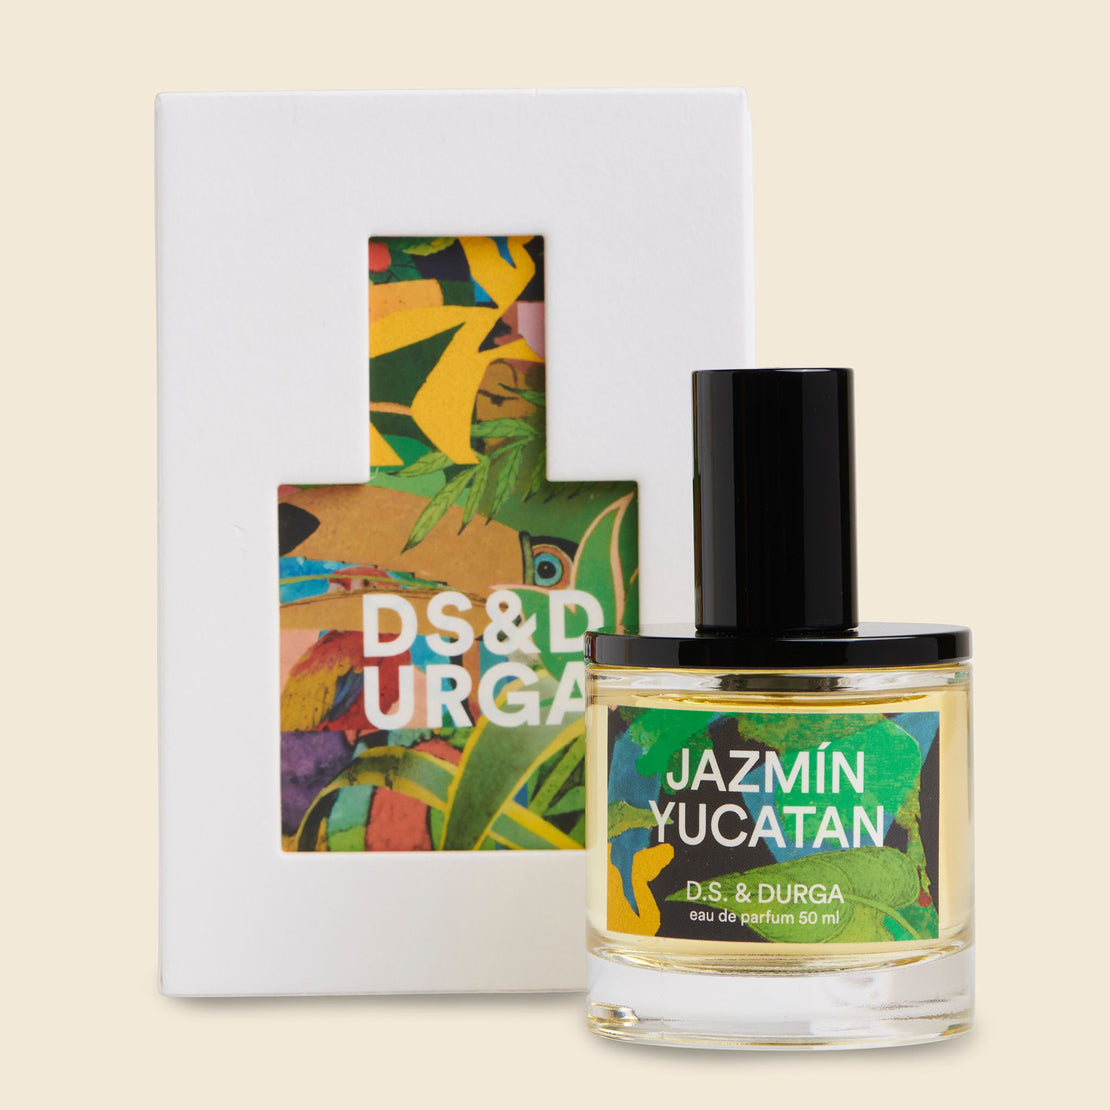 D.S. & Durga Perfume - Jazmin Yucatan